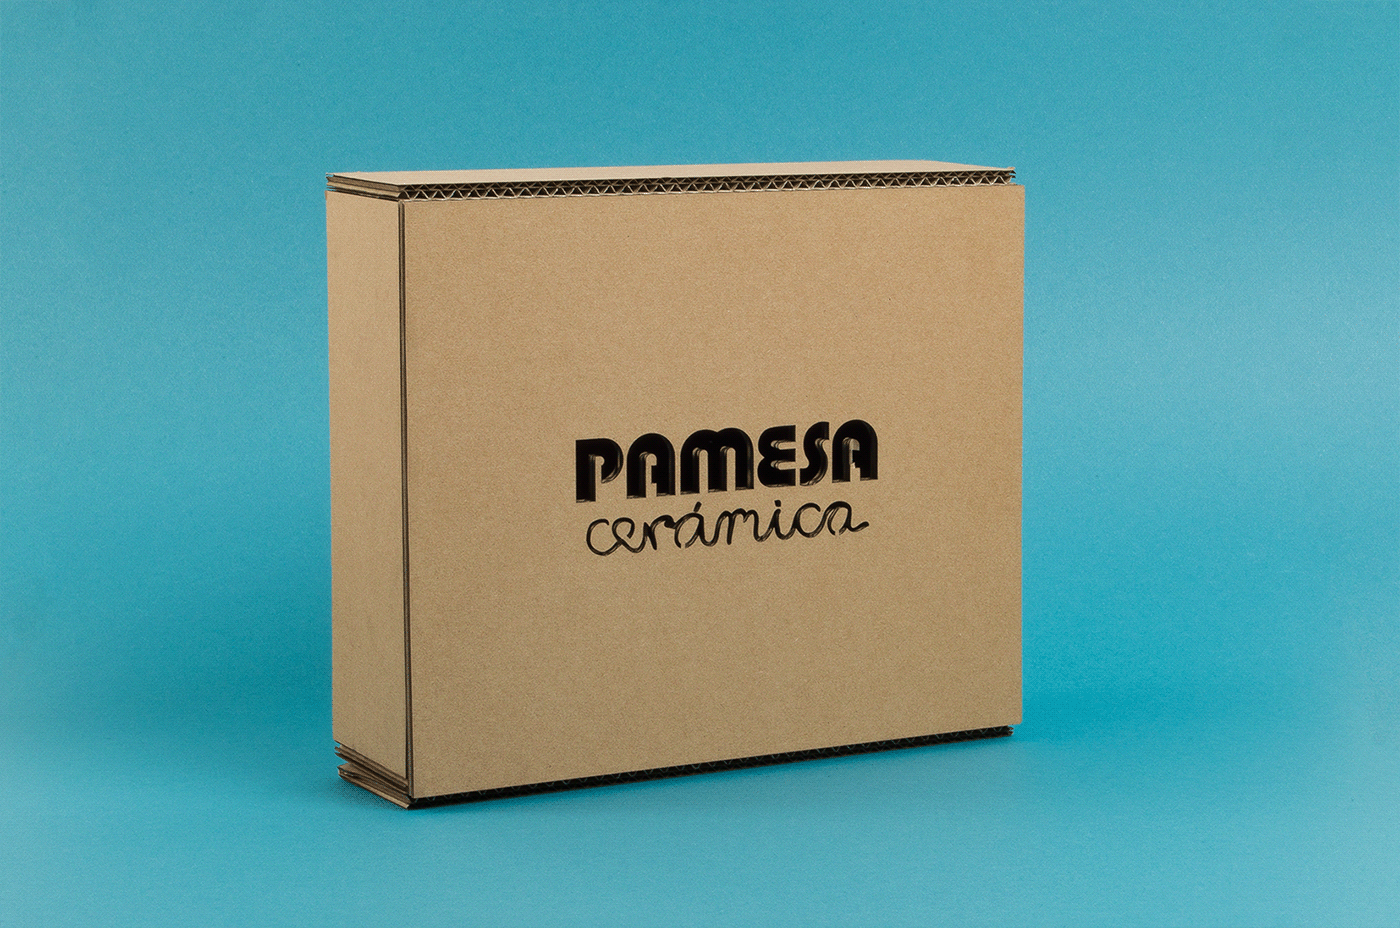 Pamesa ceramic tiles Catalogue Cevisama editorial Printing box cardboard Lasercut